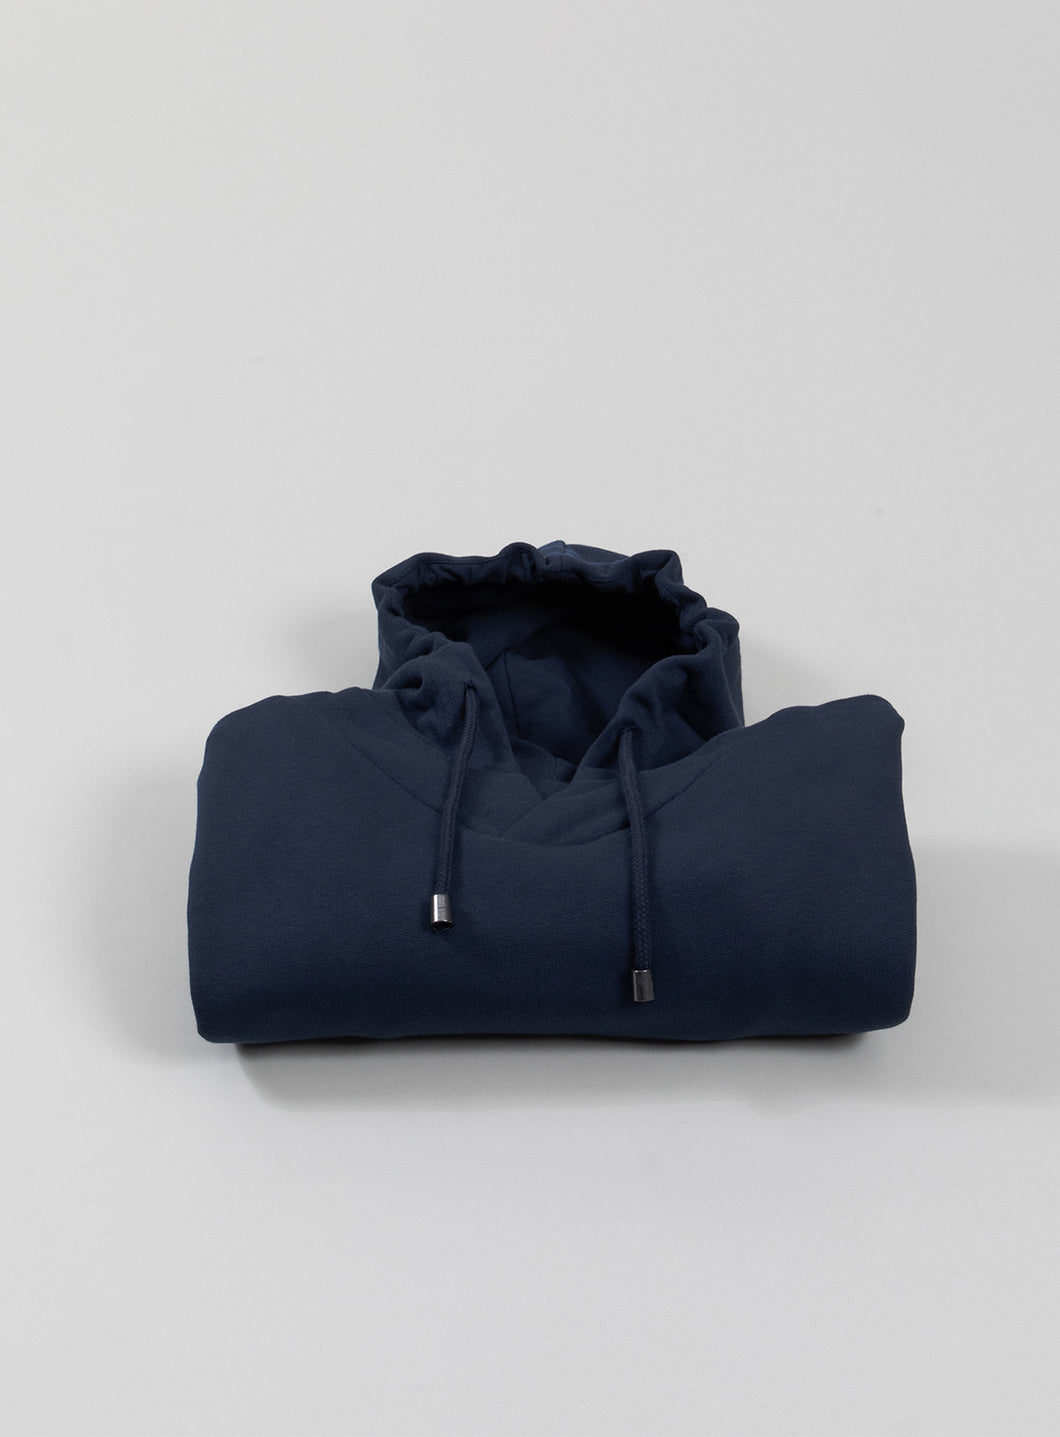 Hooded Sweatshirt with Boubou Collar in Navy Blue Fleece